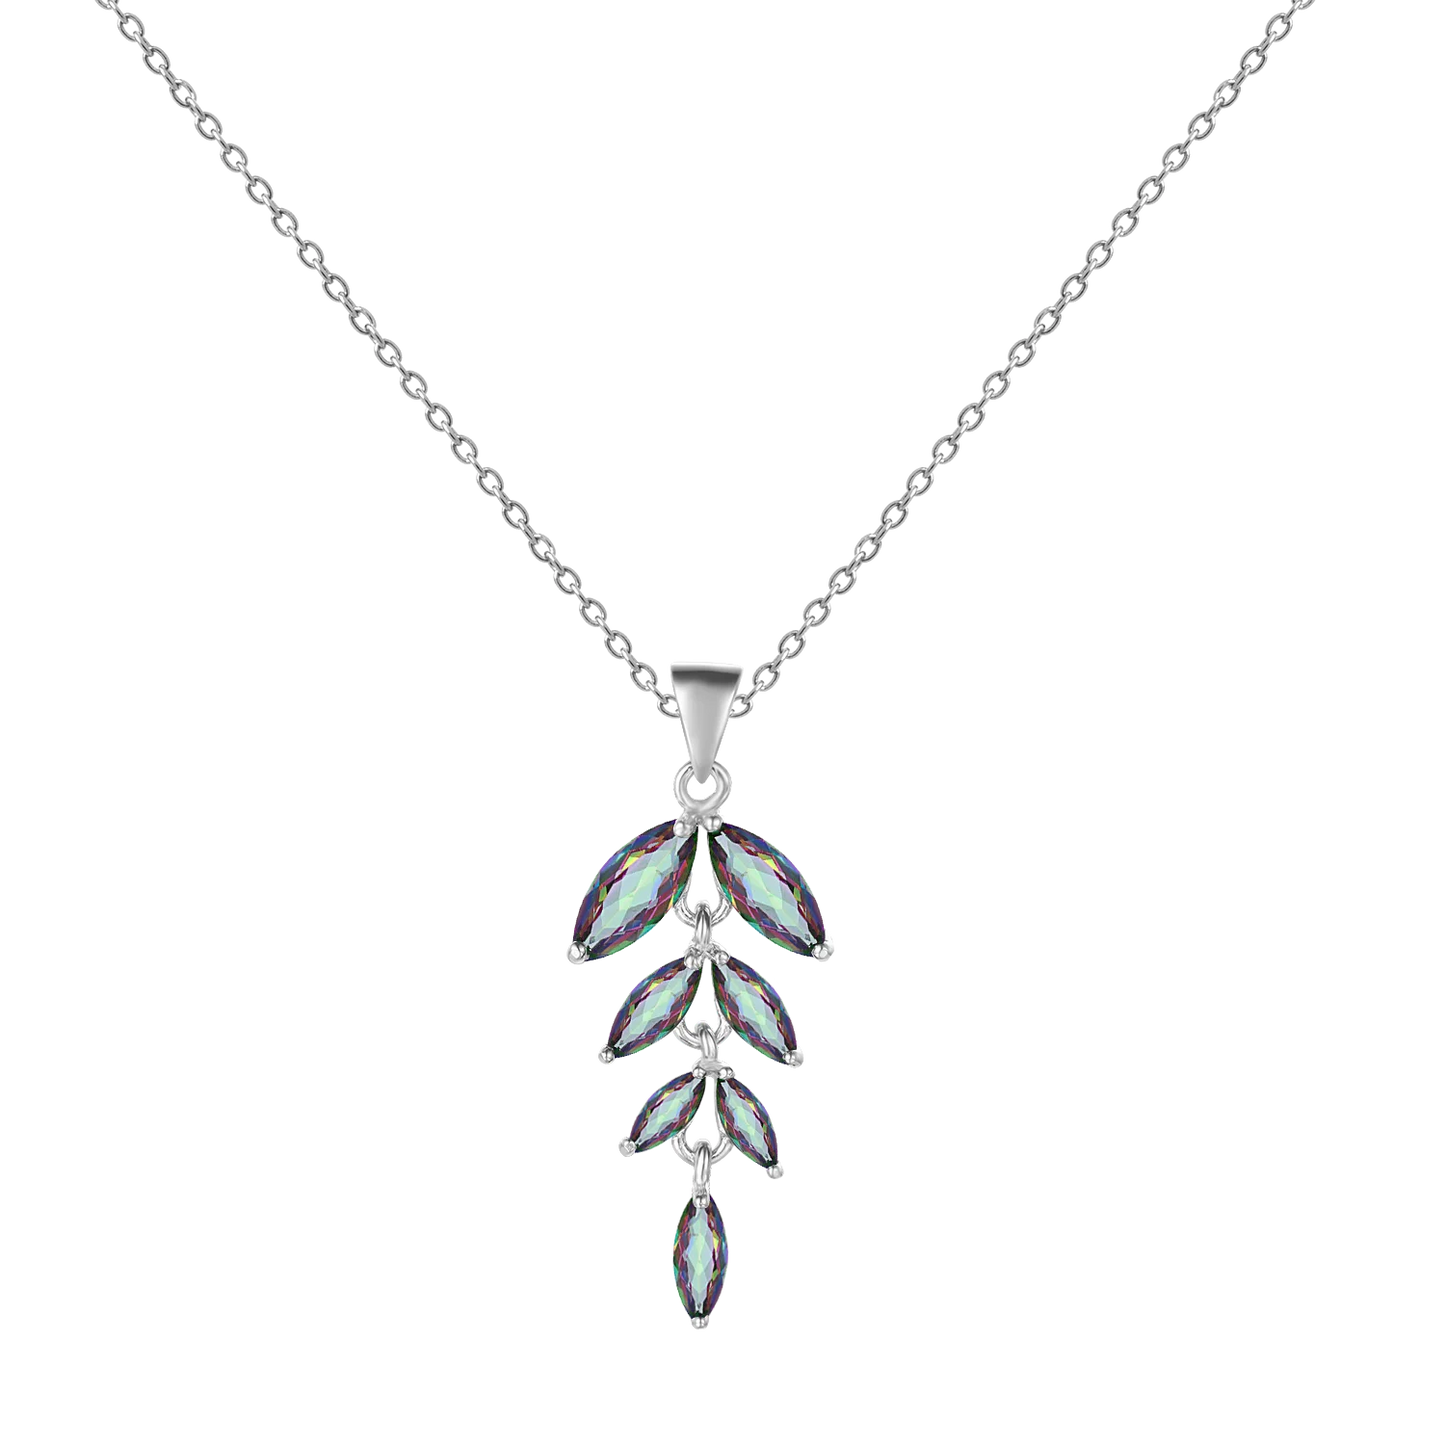 Gem's Ballet Olive Branch Peace Necklace Natural Black Garnet Gemstone Pendant Necklace in 925 Sterling Silver with 18" Chain Mystic Quartz